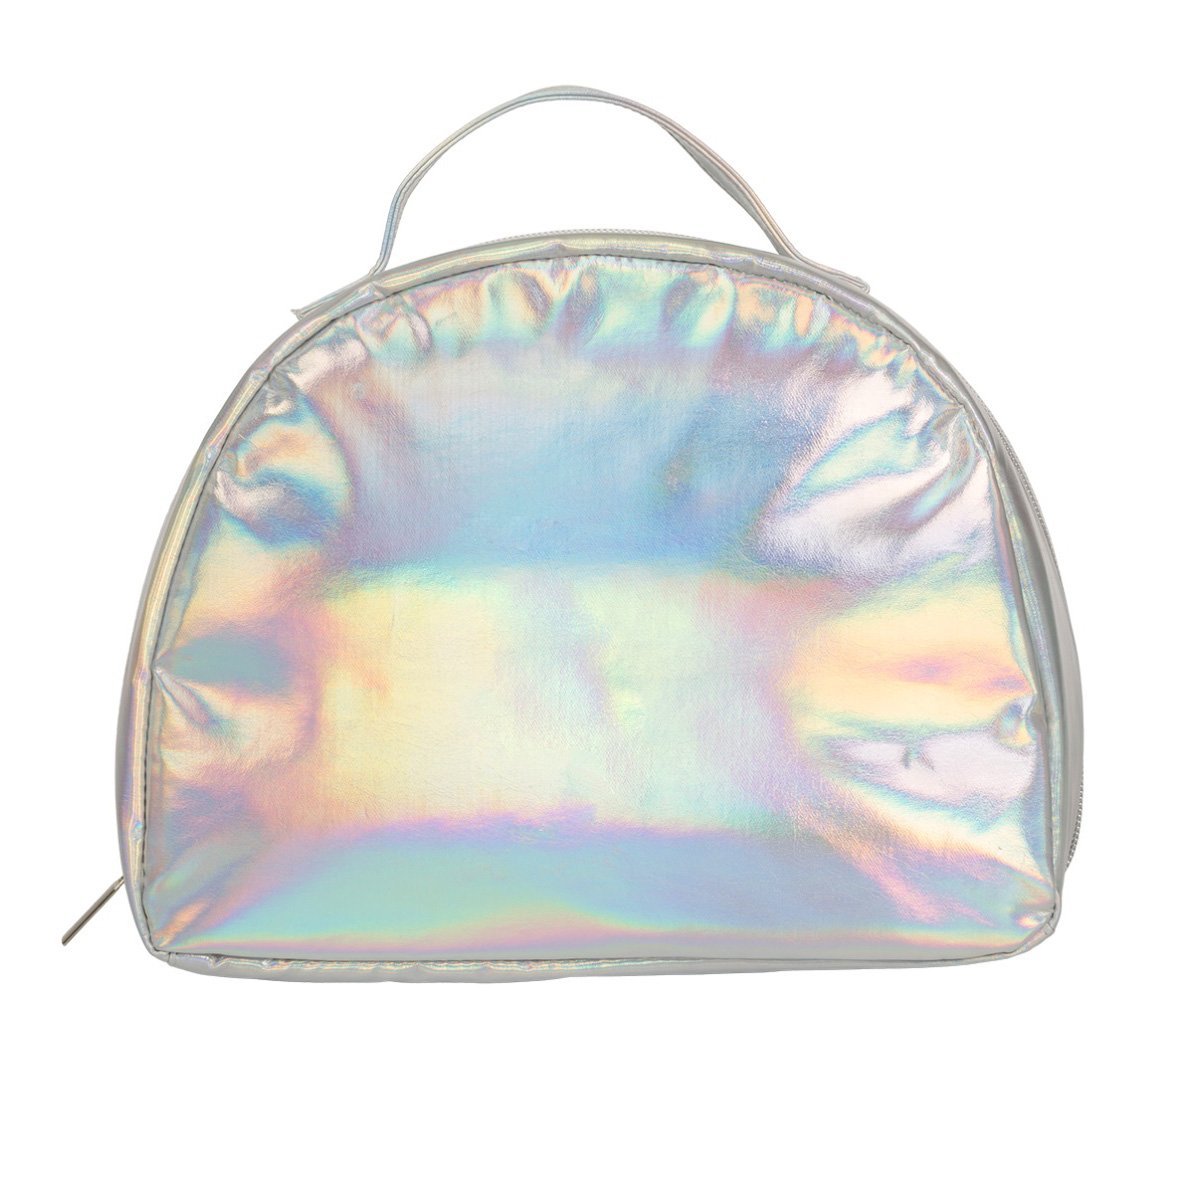 a-little-lovely-company-cool-bag-rainbow-sequin- (3)